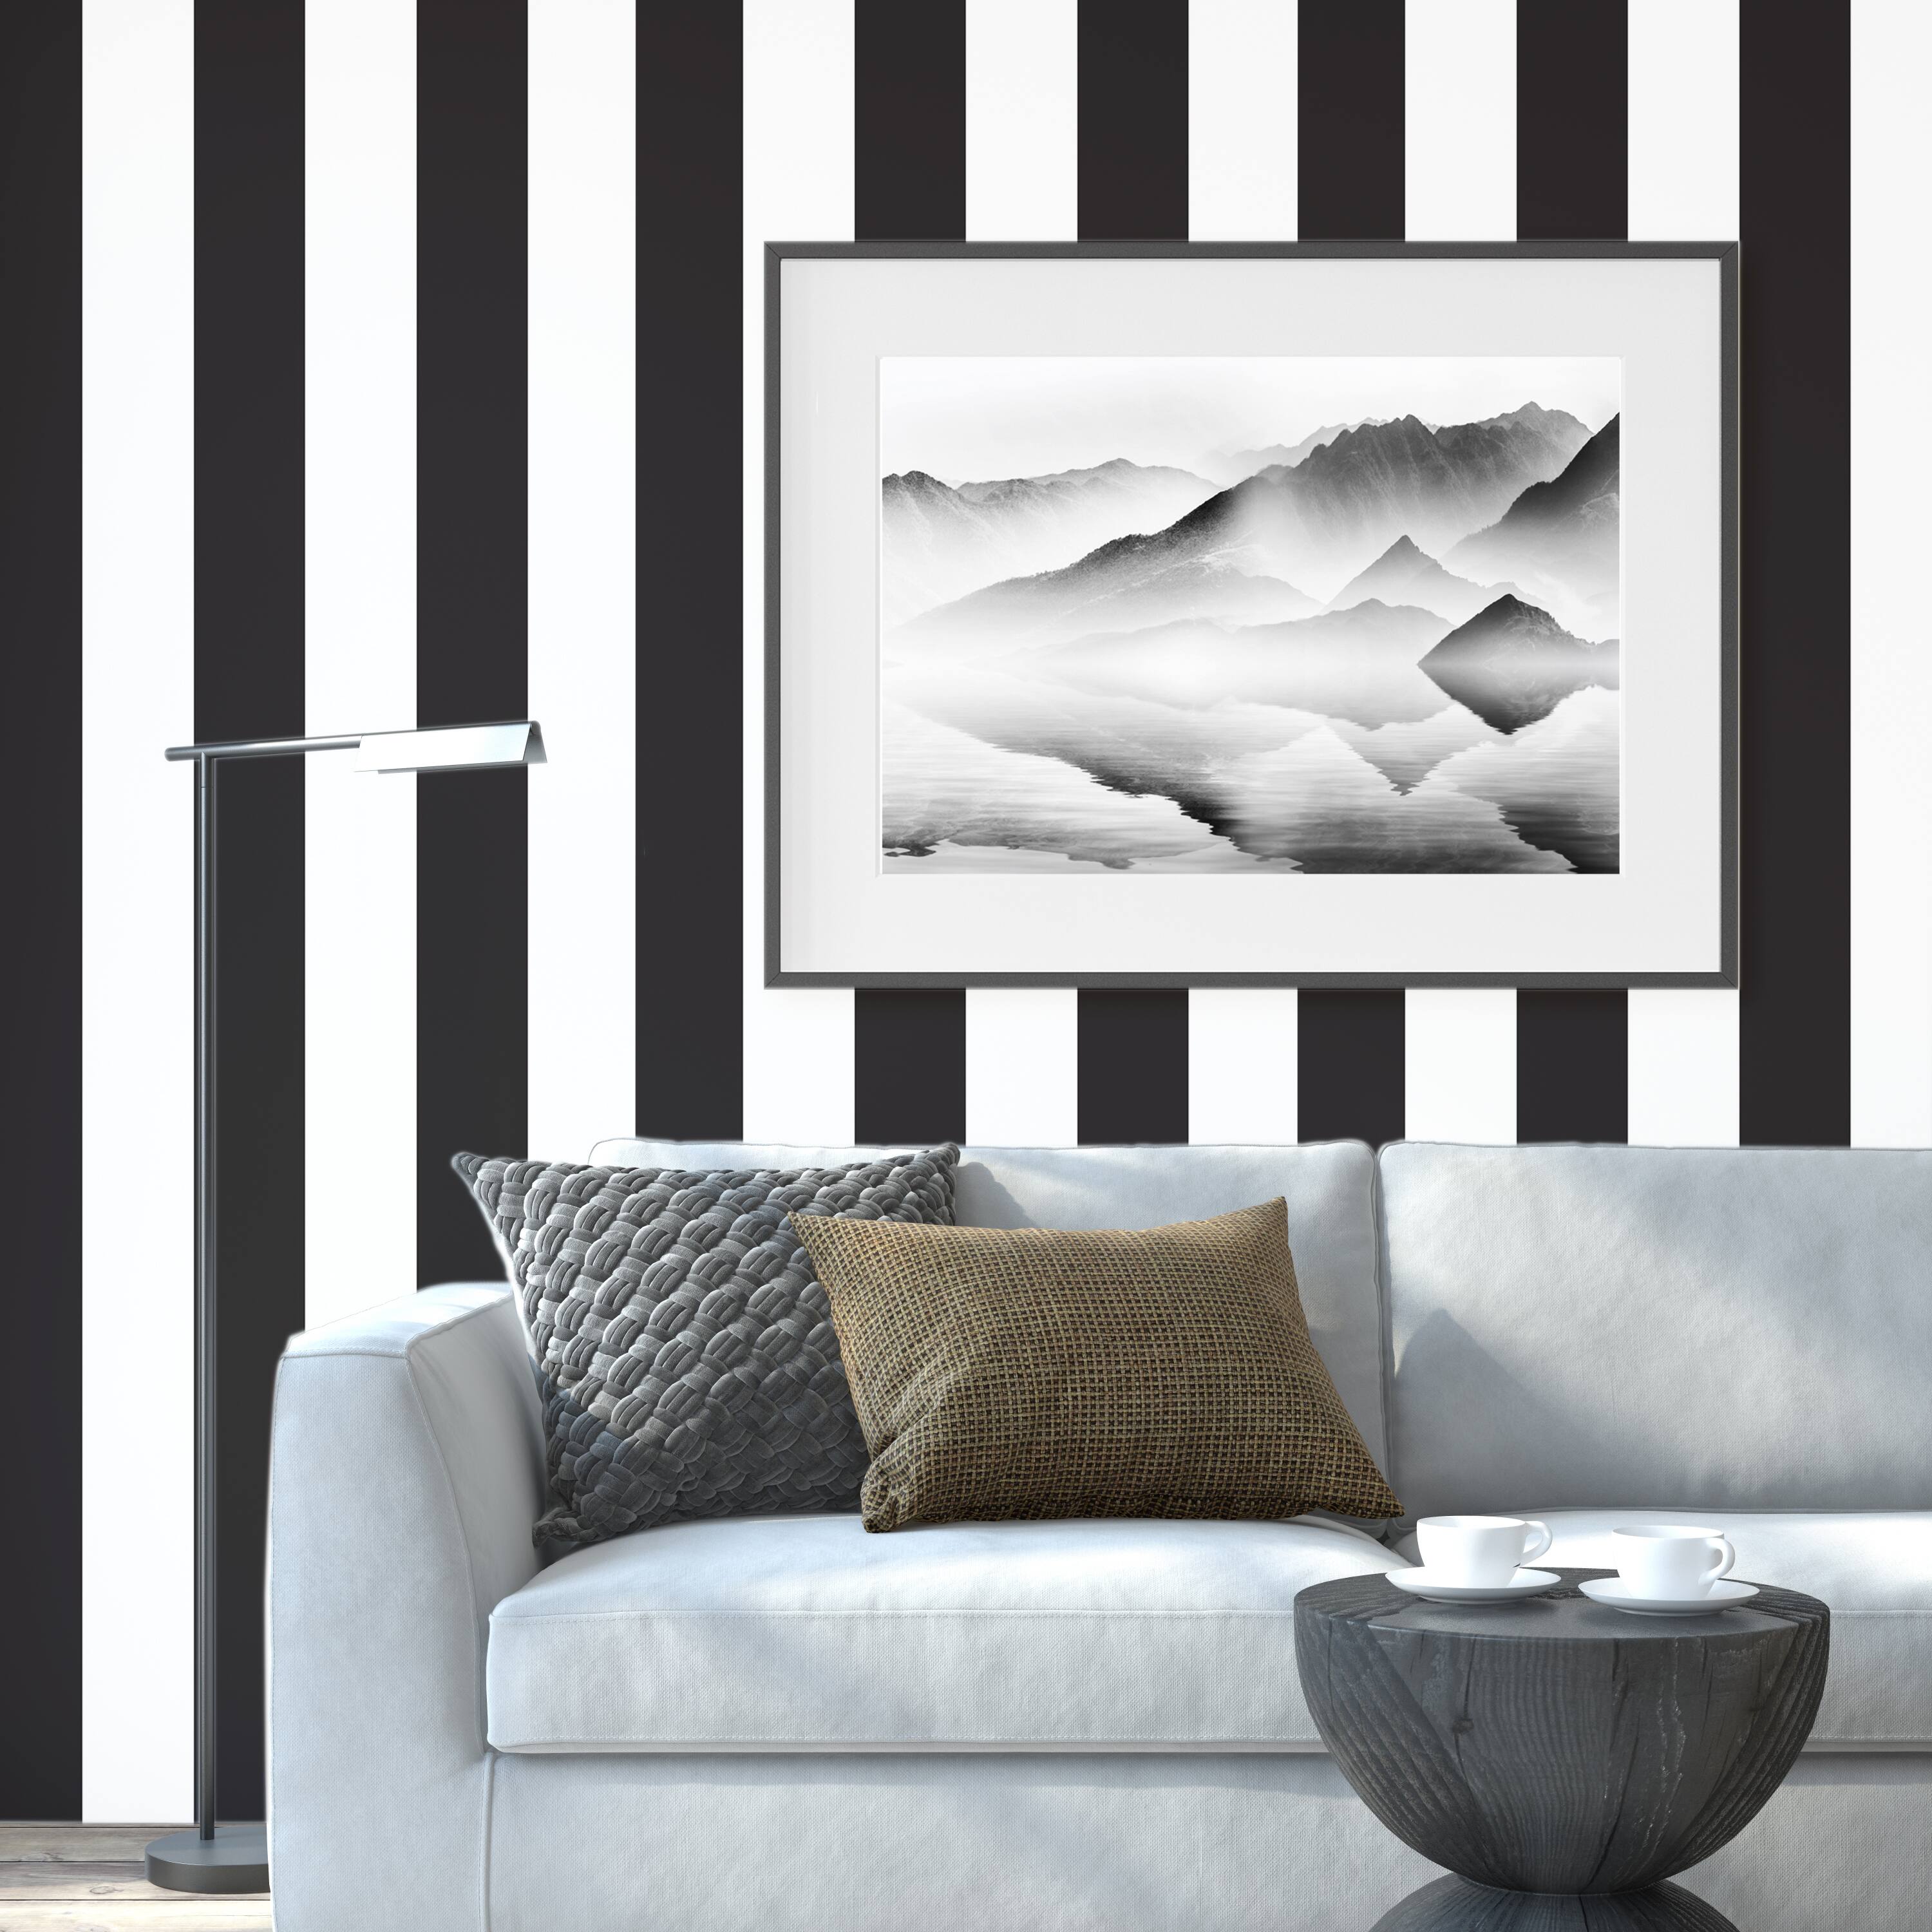 Simplify Black &#x26; White Striped Adhesive Wallpaper